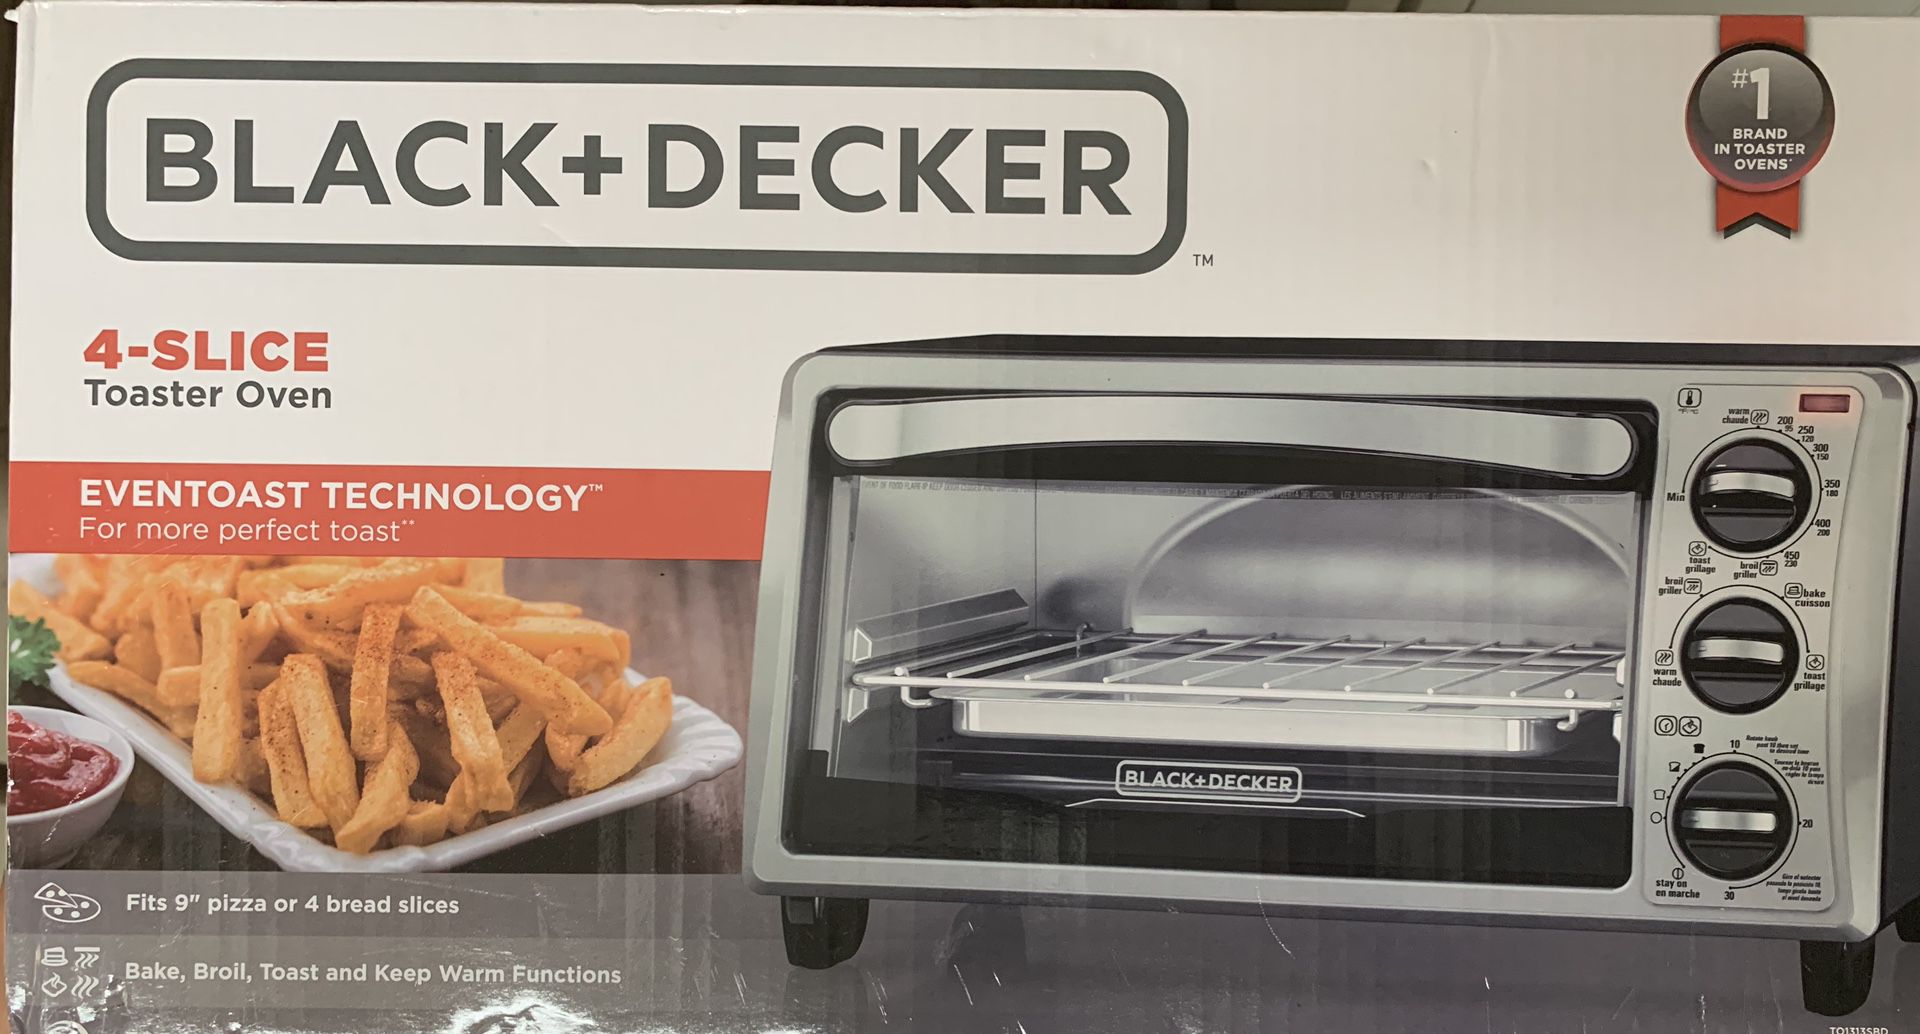 Black+ Decker 4-Slice Toaster Oven